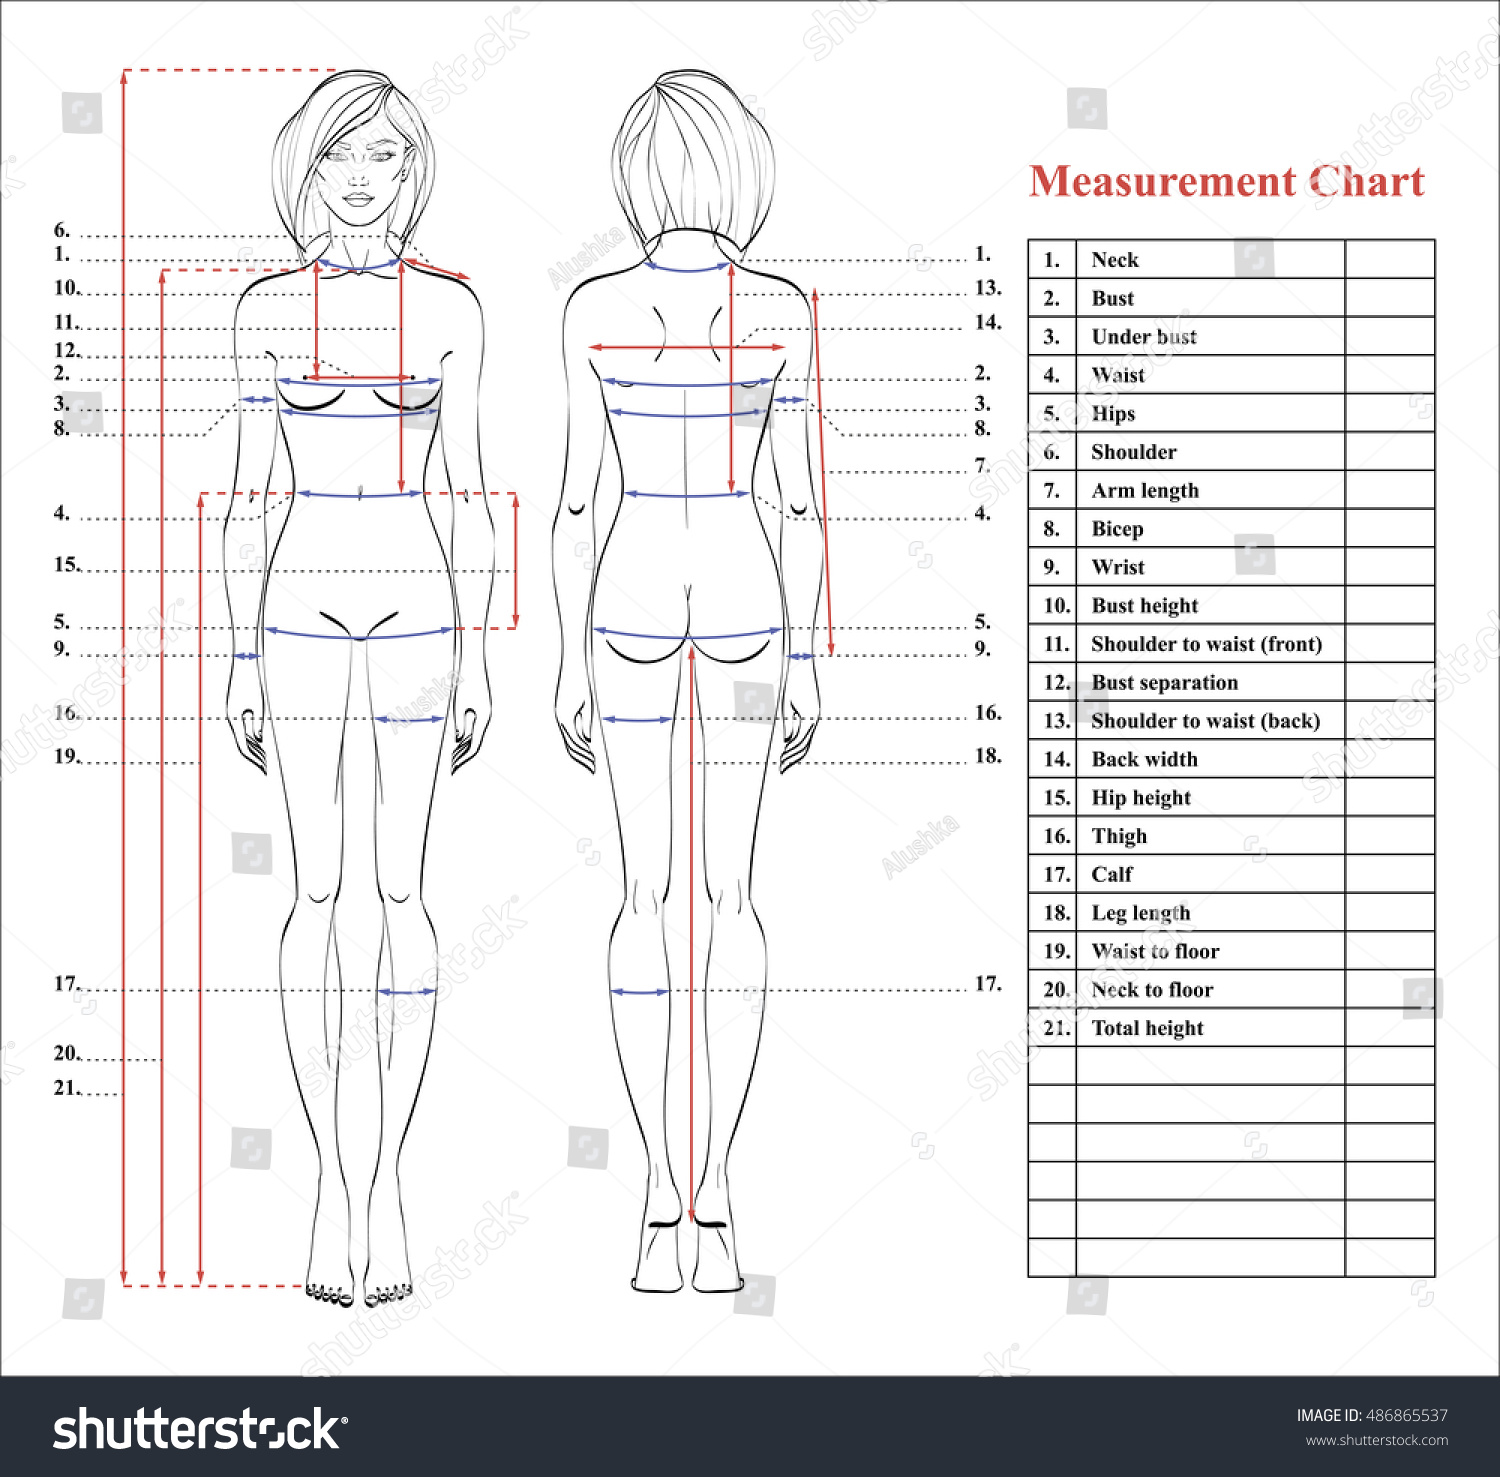 diagram-printable-human-body-measurement-diagram-mydiagram-online